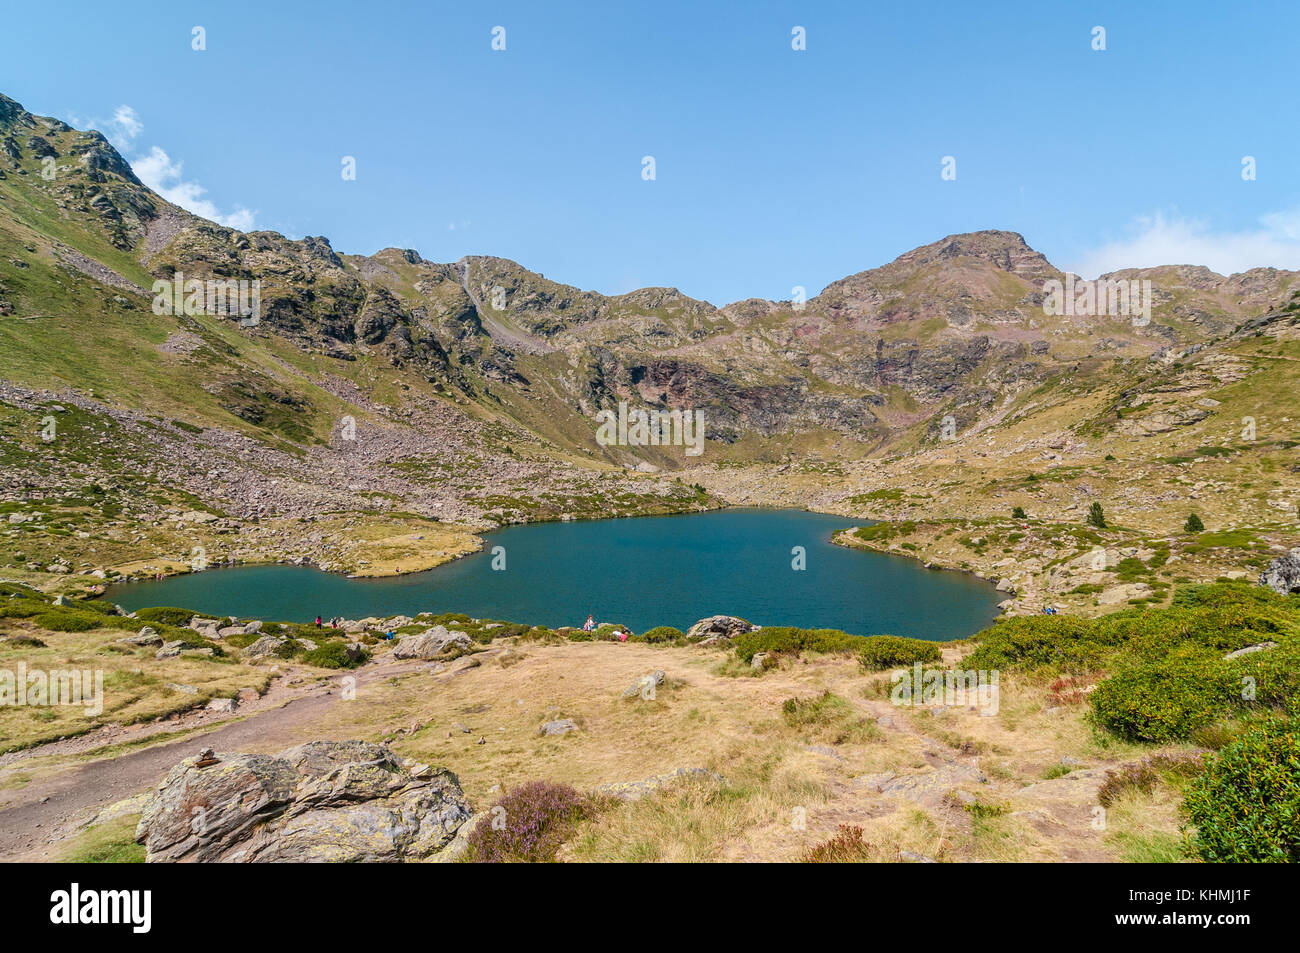 view of high mountain lake called 'Estany del mig' - midle lake,  near Ordino, Tristaina, Andorra Stock Photo